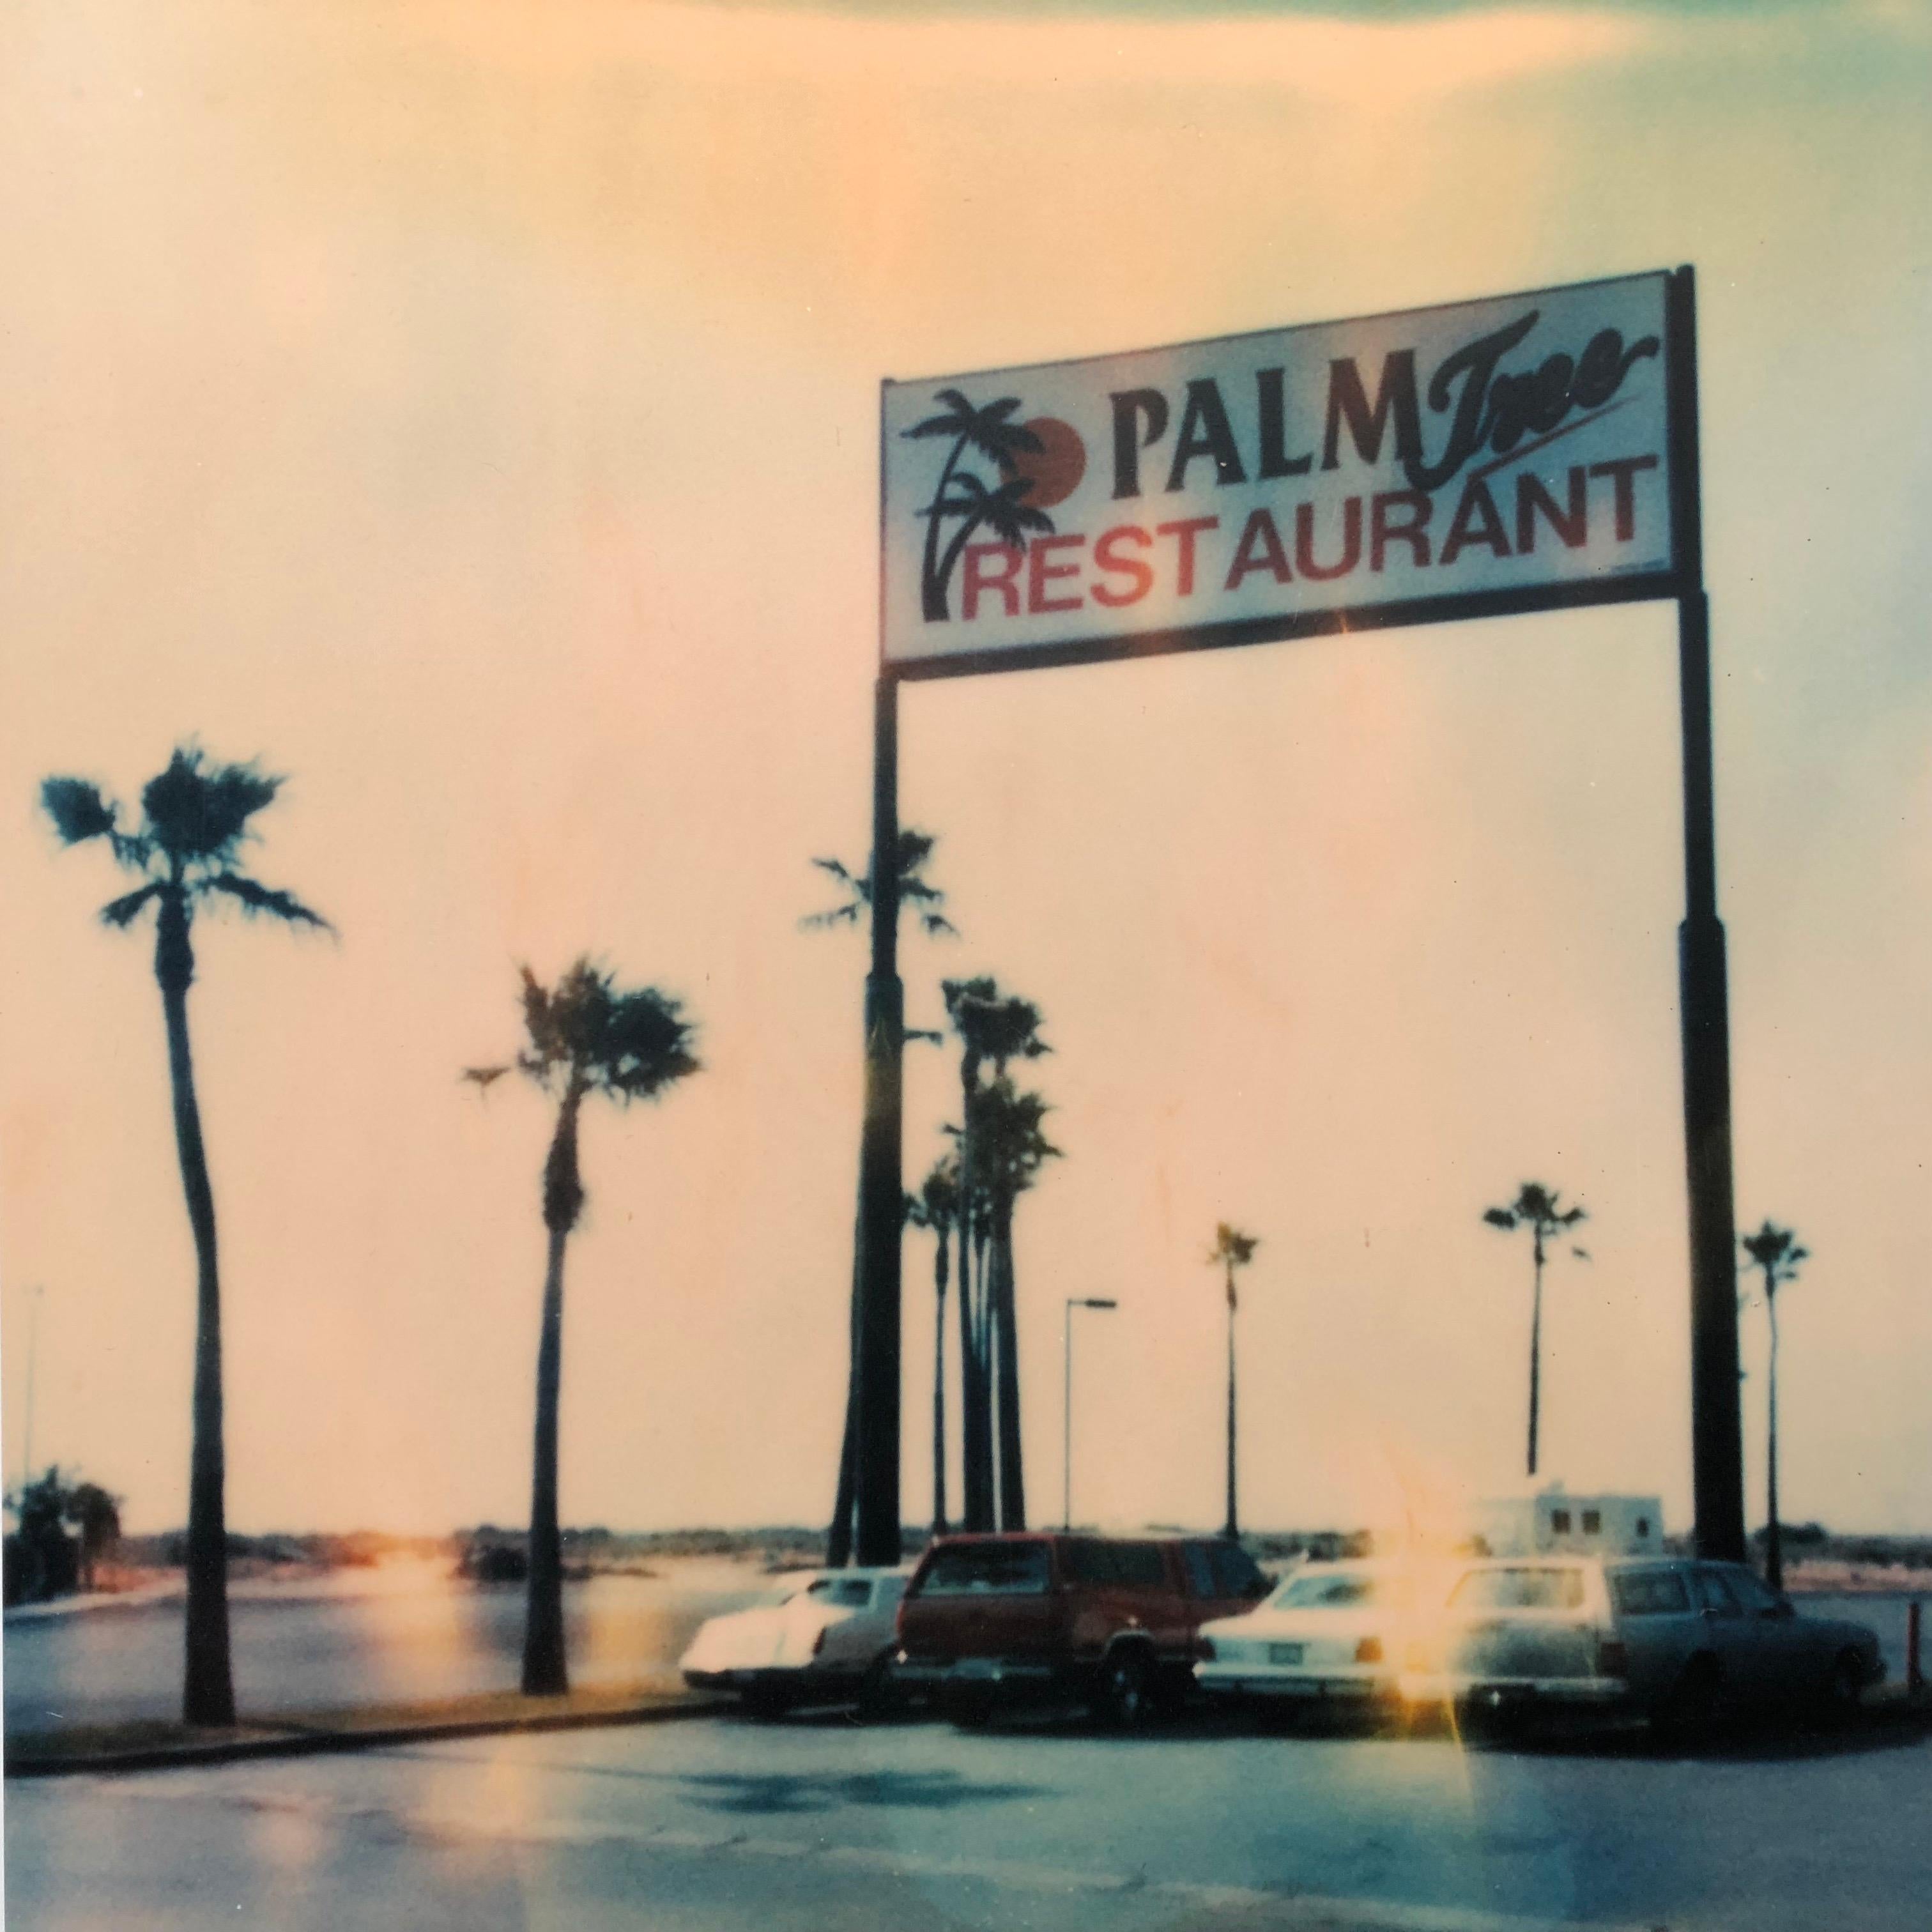 Palm Tree Restaurant (The Last Picture Show) - Beige Landscape Photograph by Stefanie Schneider